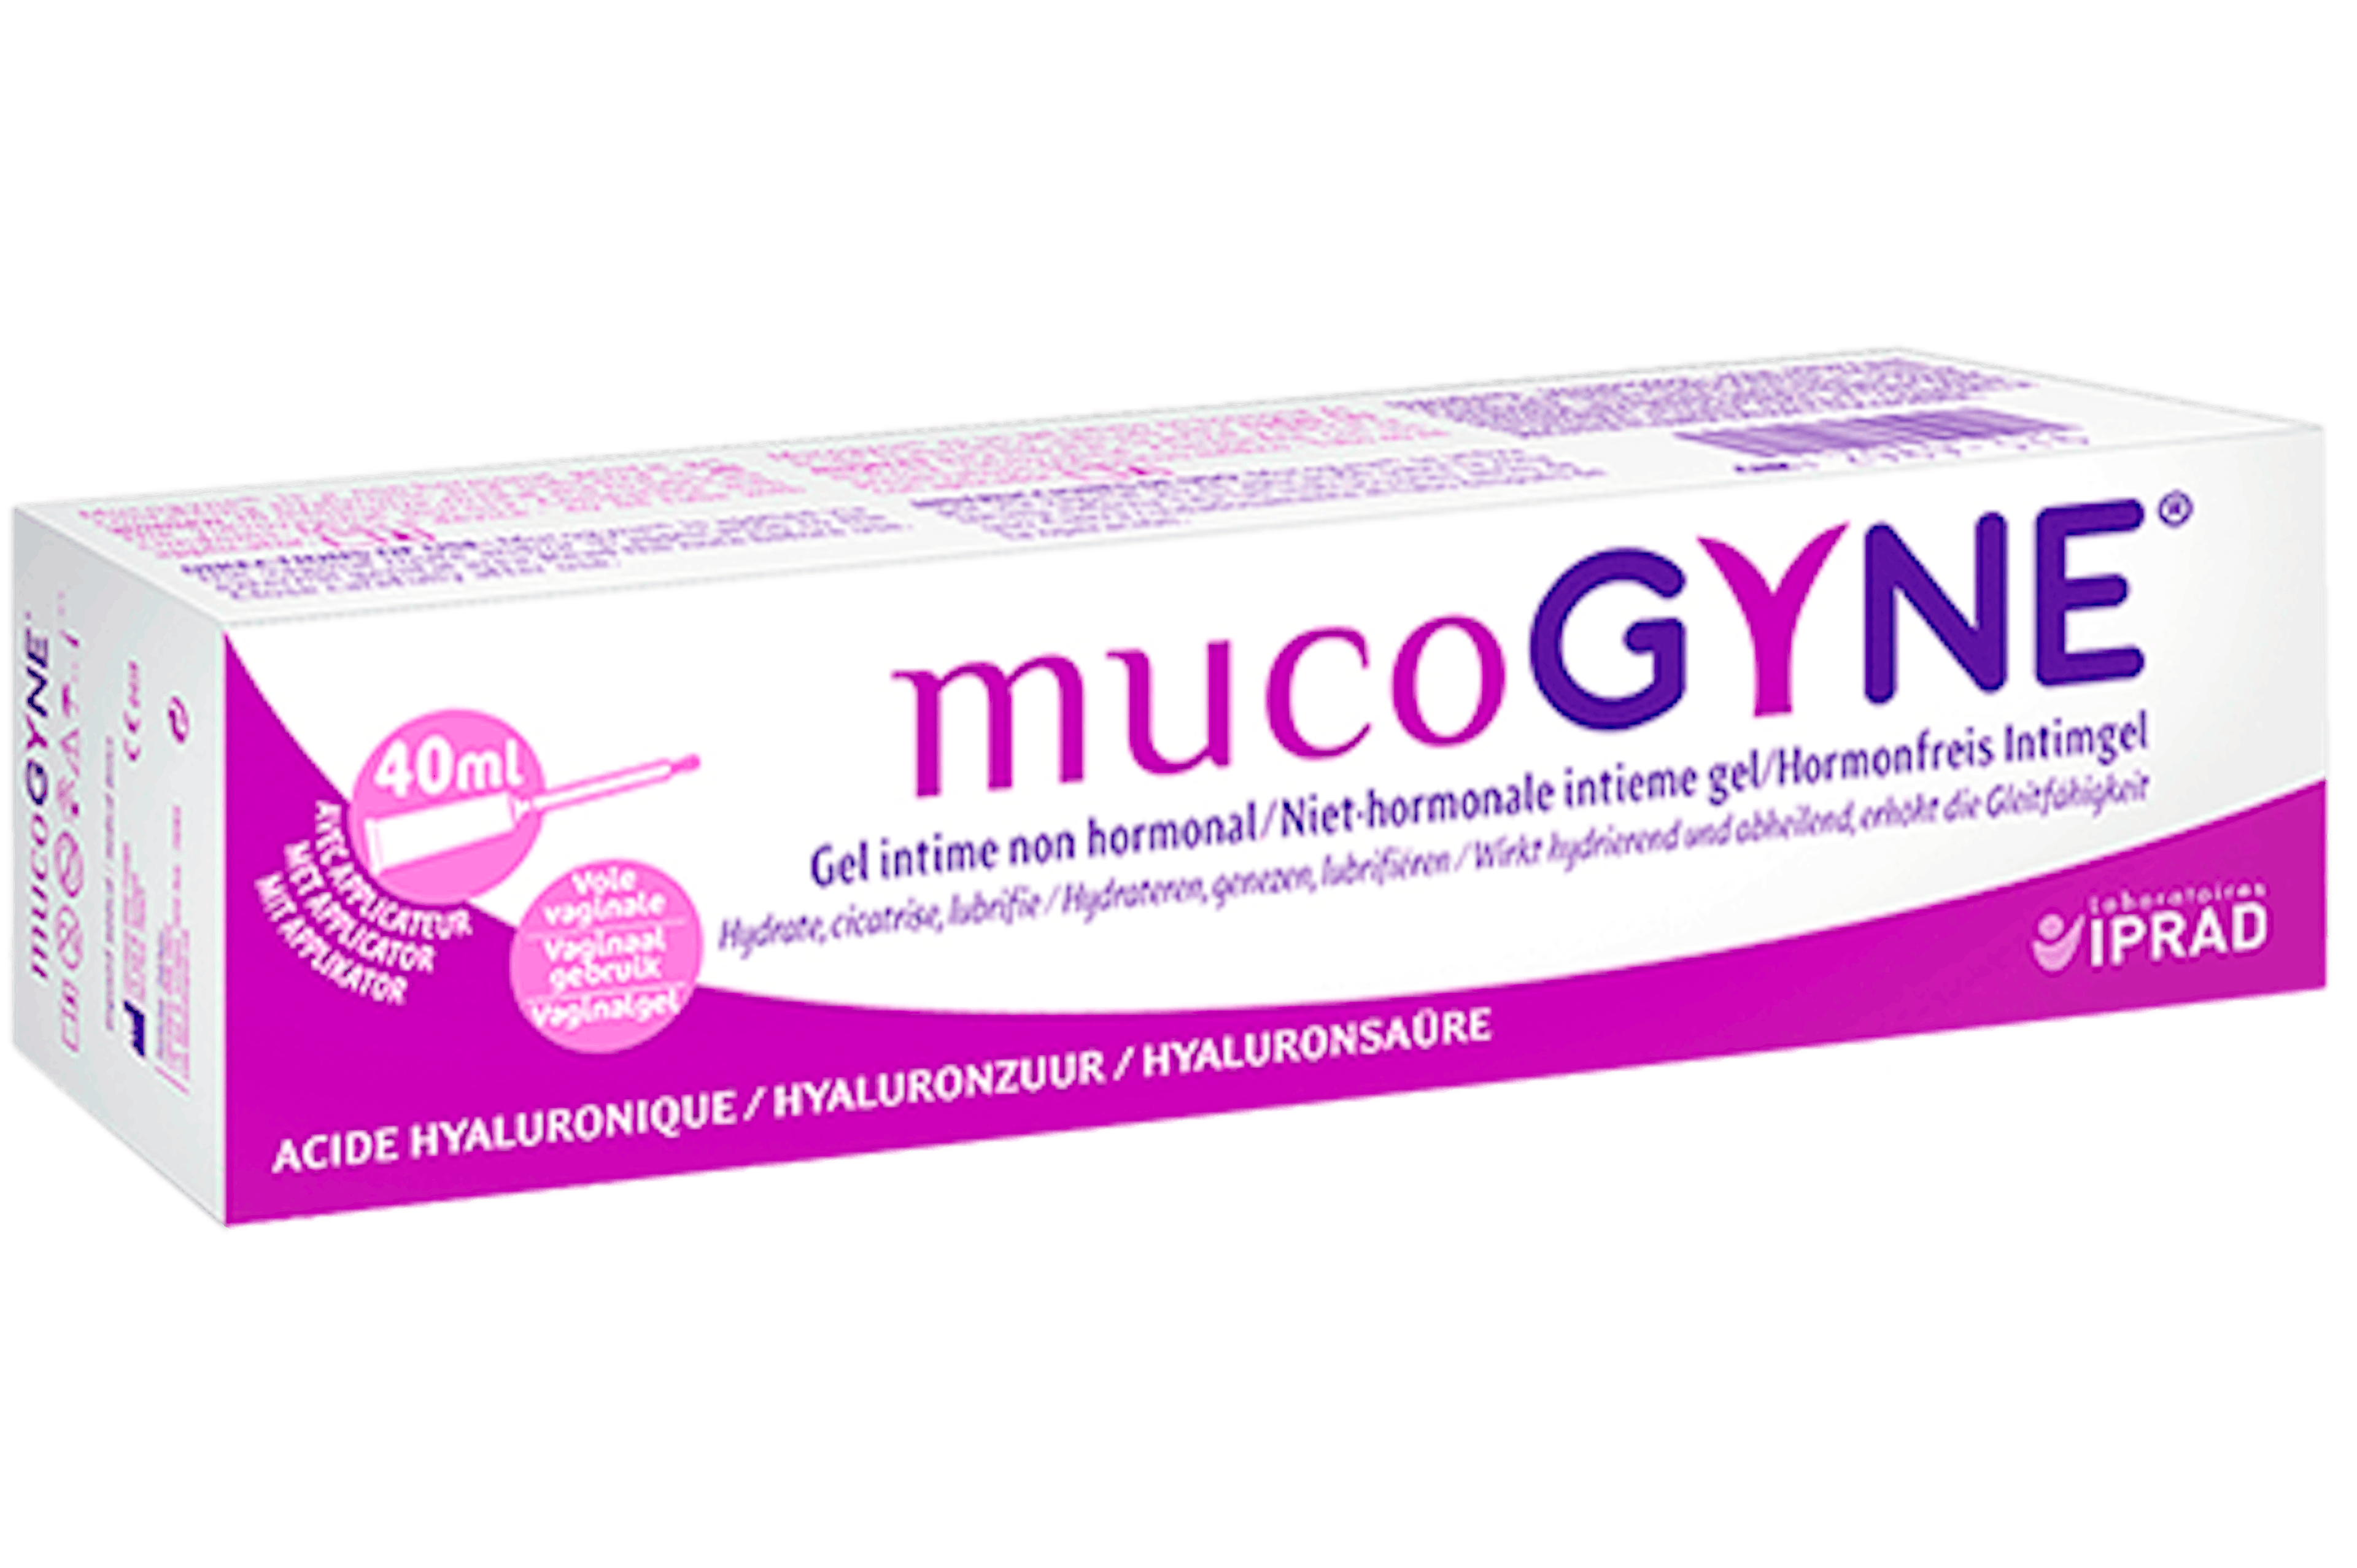 MUCOGYNE gel vaginal 40ml (Producto Sanitario)